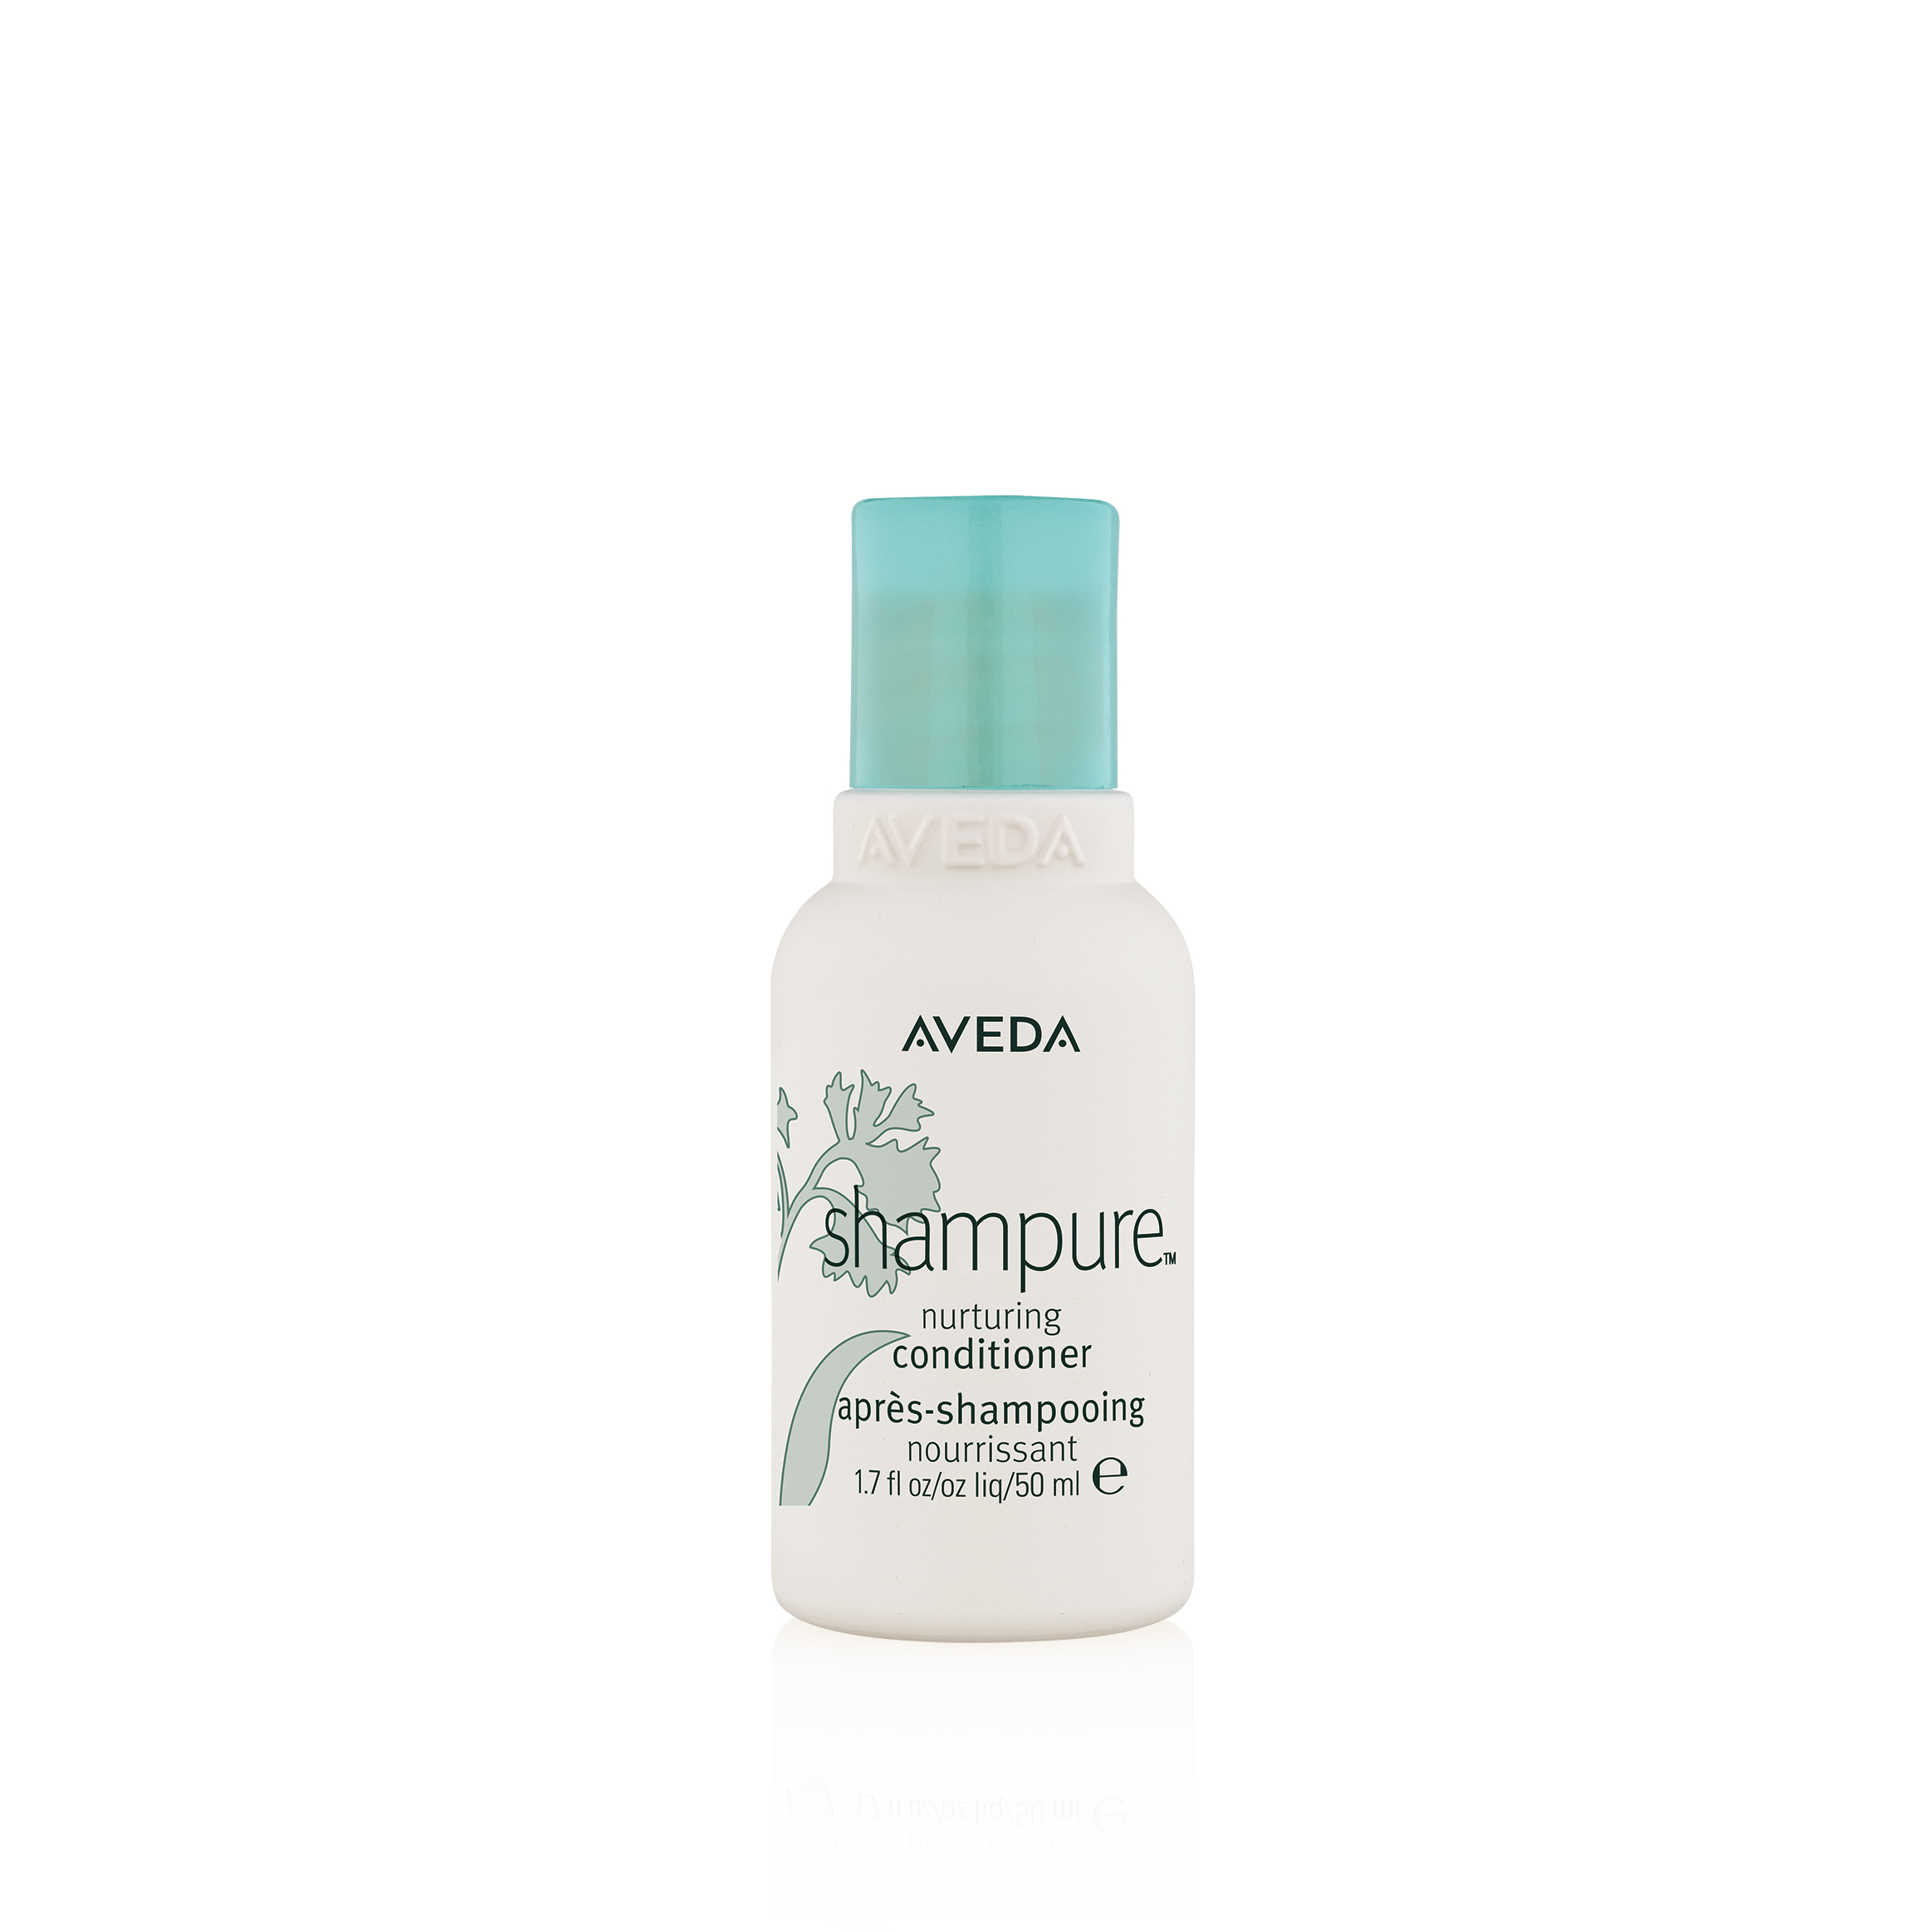 https://av-dashop.nl/wp-content/uploads/2020/11/Aveda-shampure-conditioner-50ml.jpg